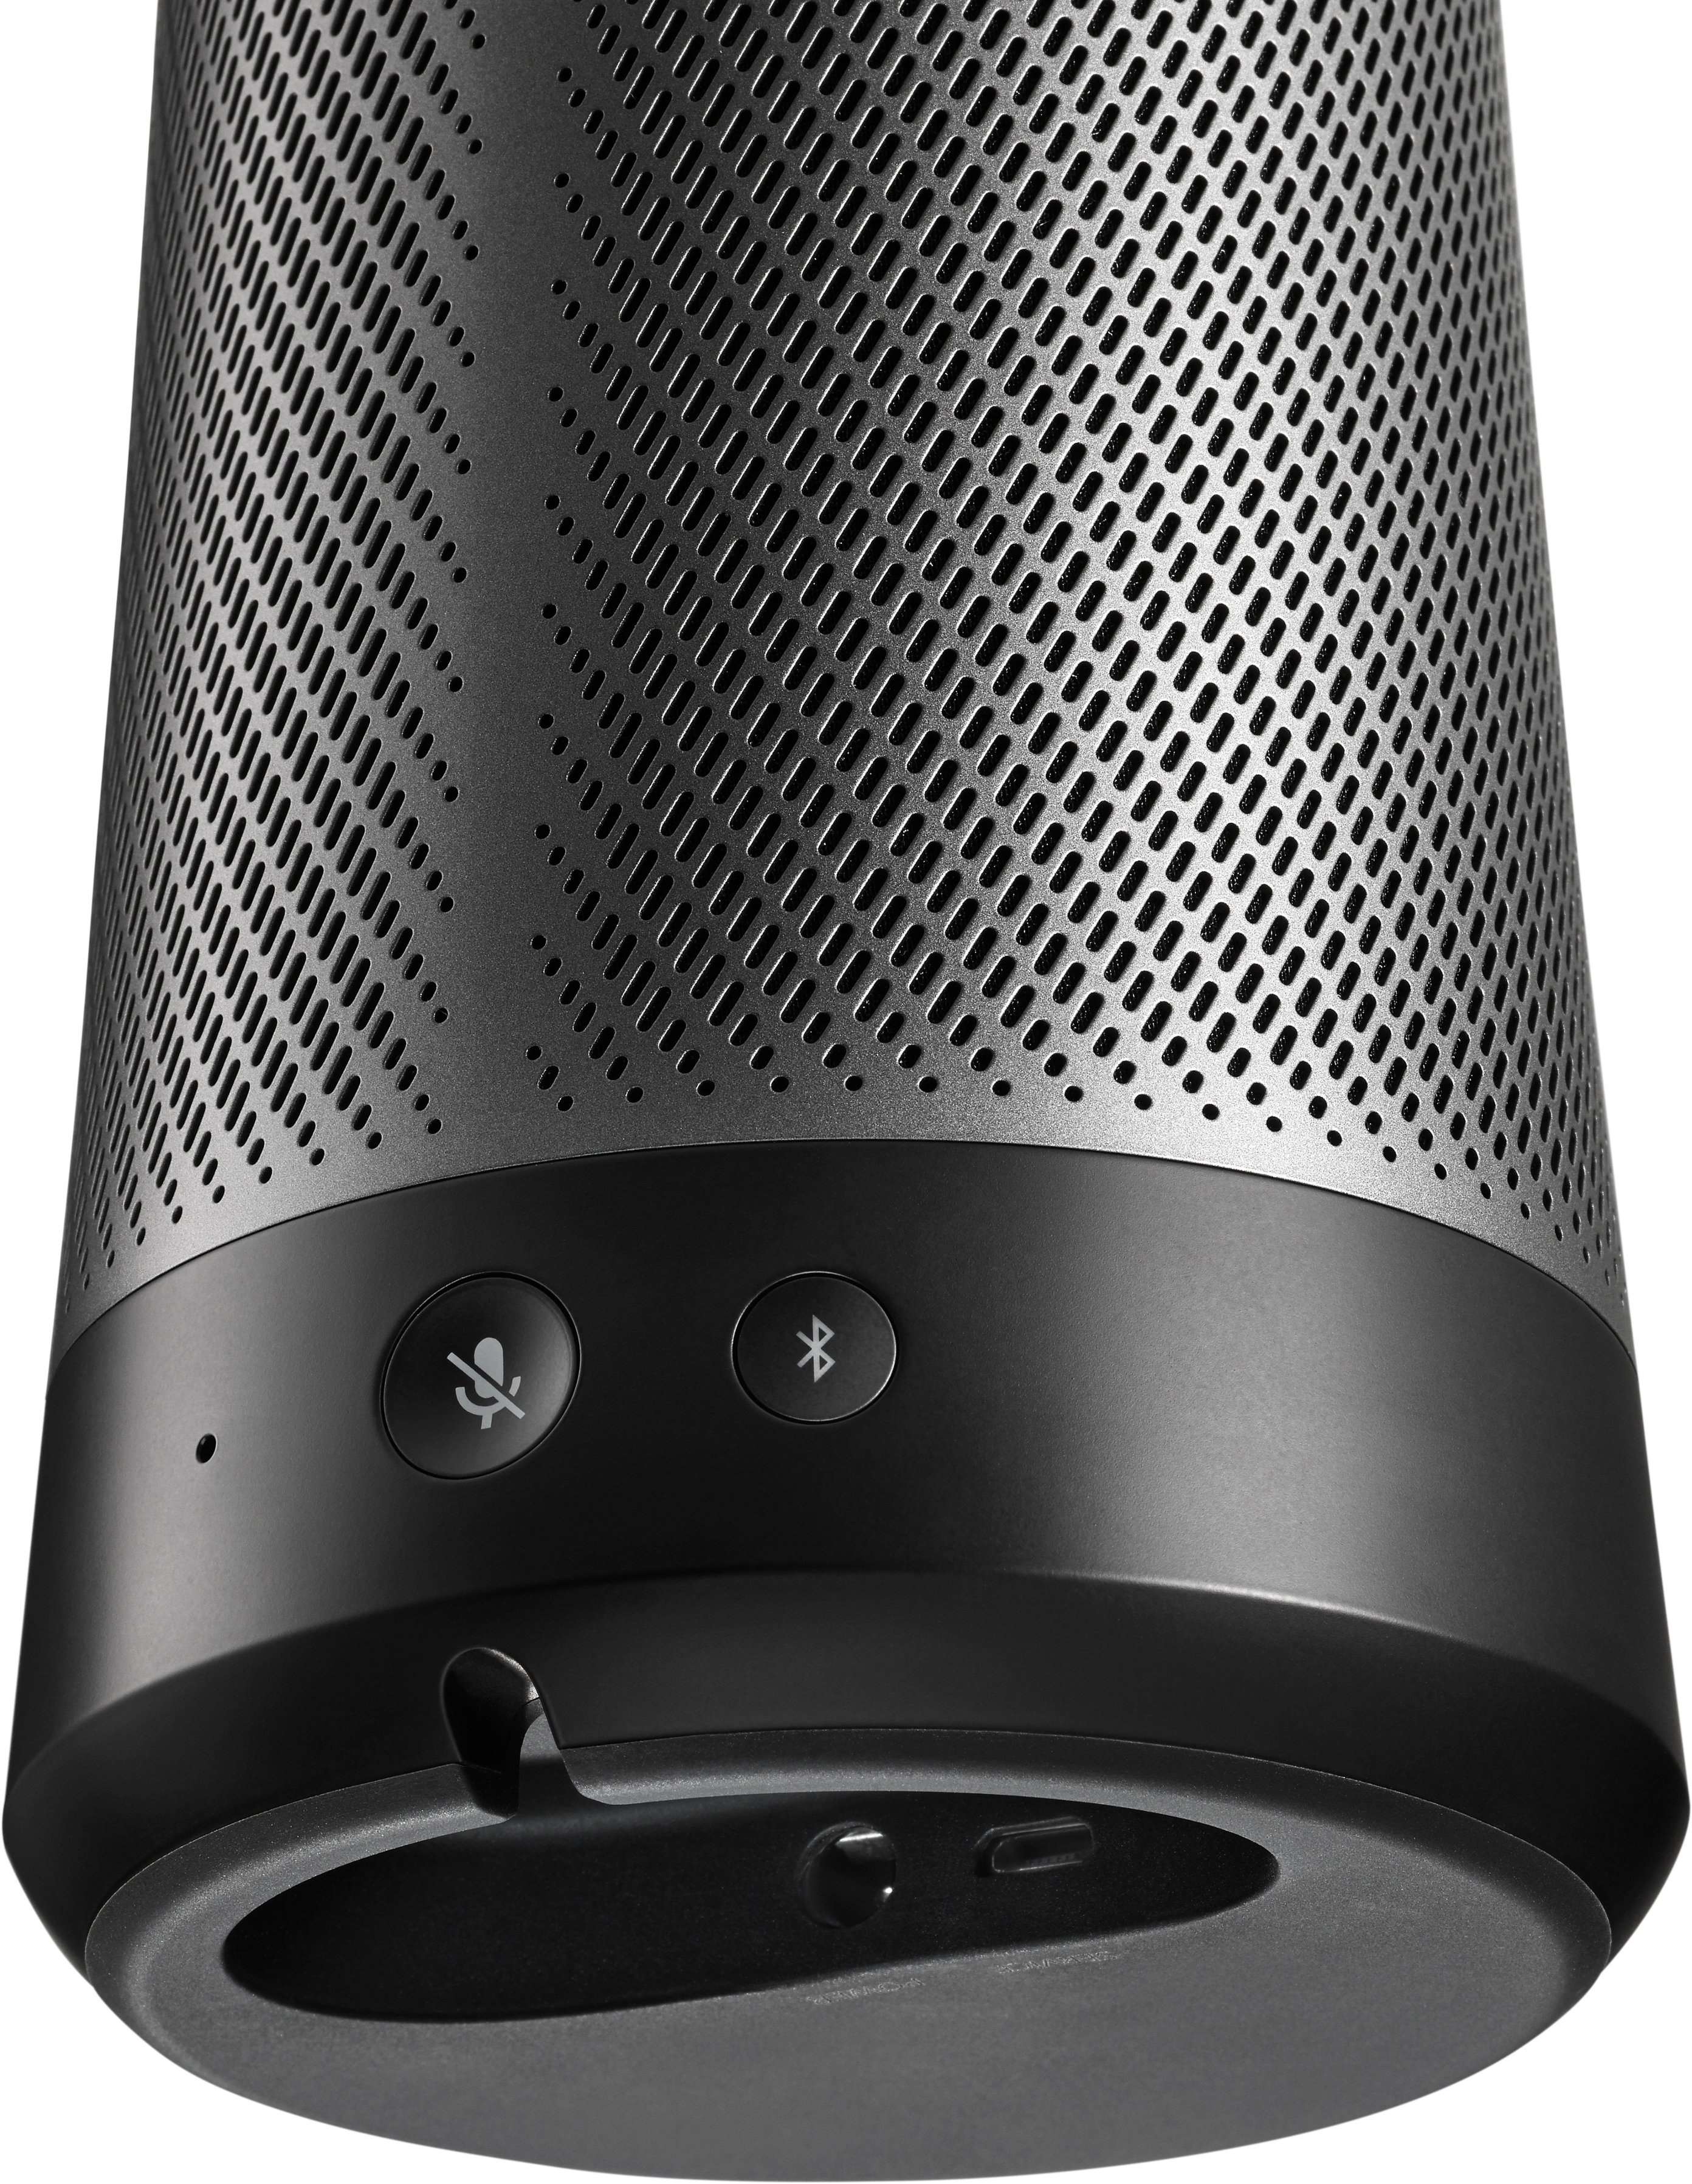 Harman/Kardon - Invoke Smart Bluetooth Speaker - Graphite - eBay